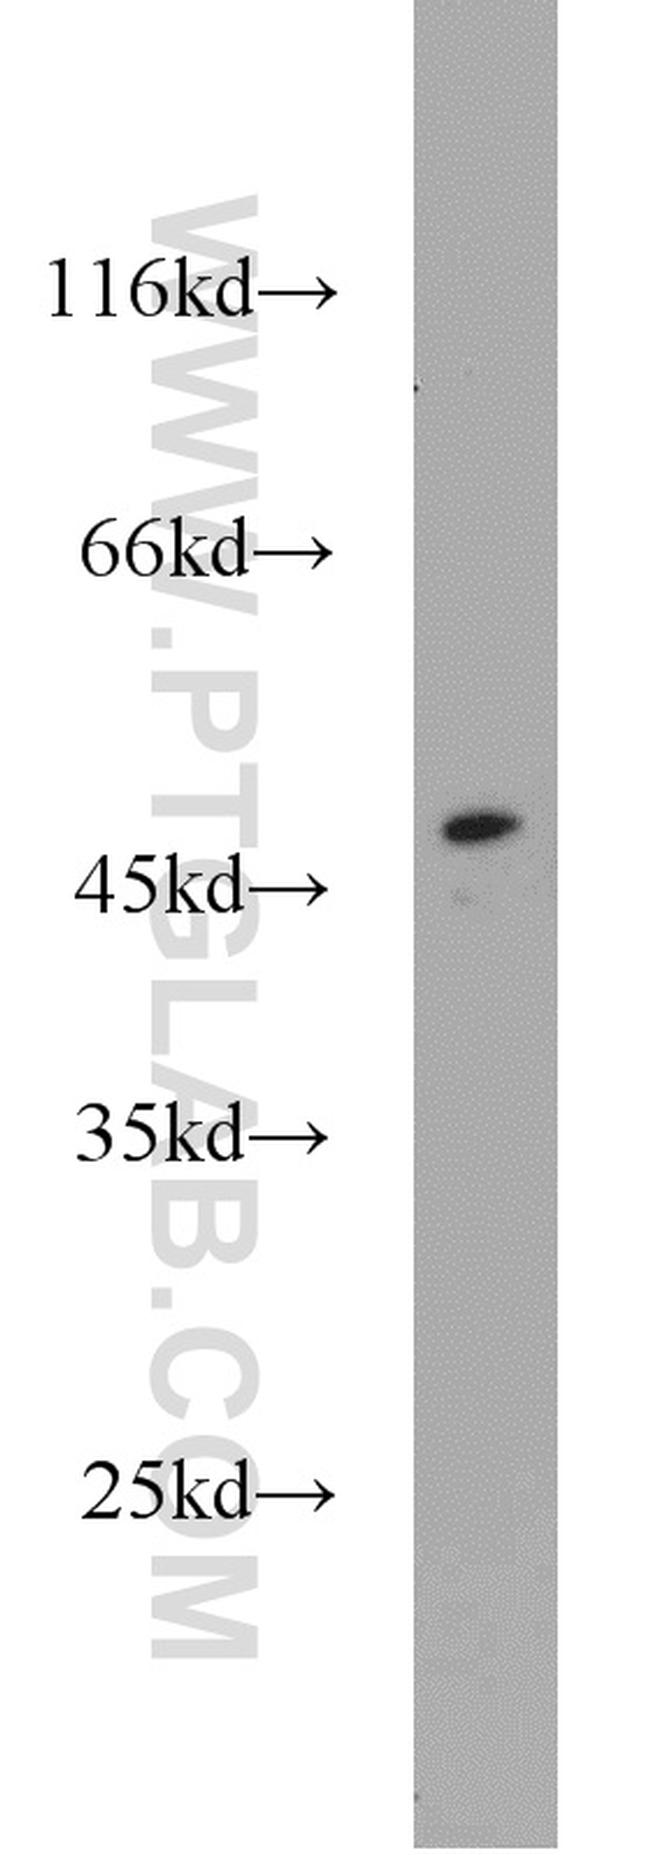 SOAT2 Antibody in Western Blot (WB)